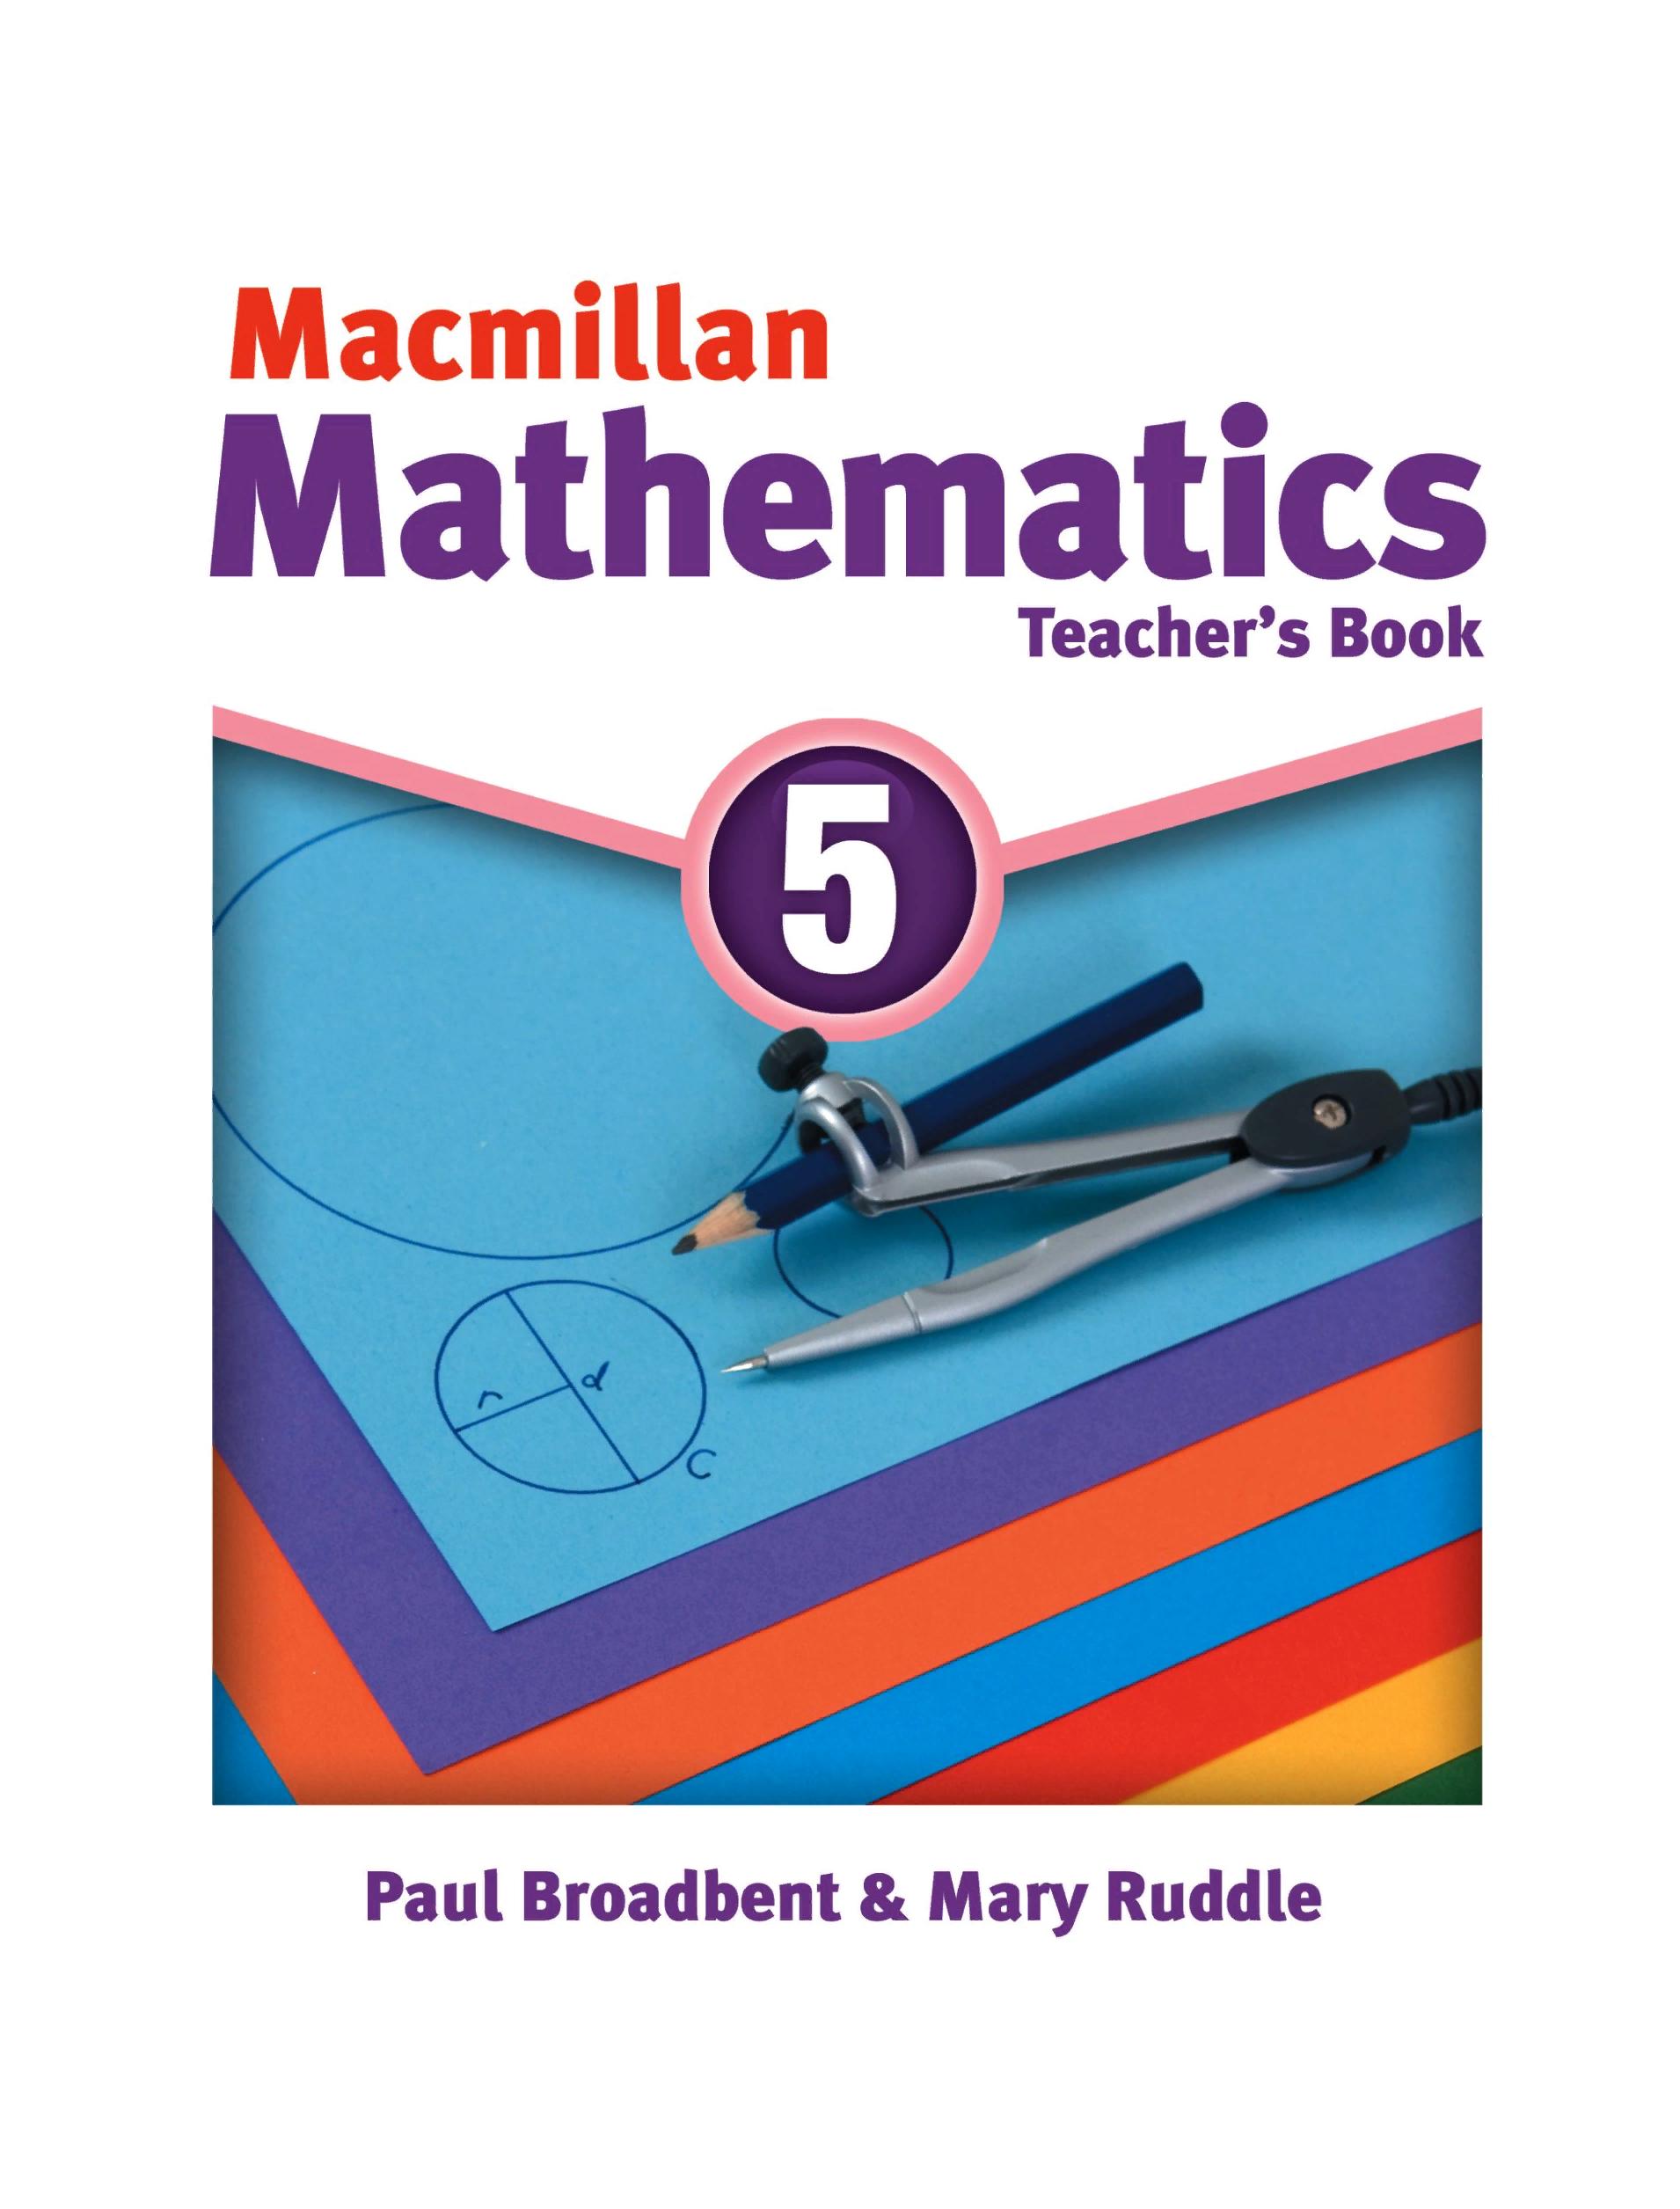 Macmillan Mathematics. Math teacher книга. Макмиллан c1 teacher book. Macmillan books for teachers.